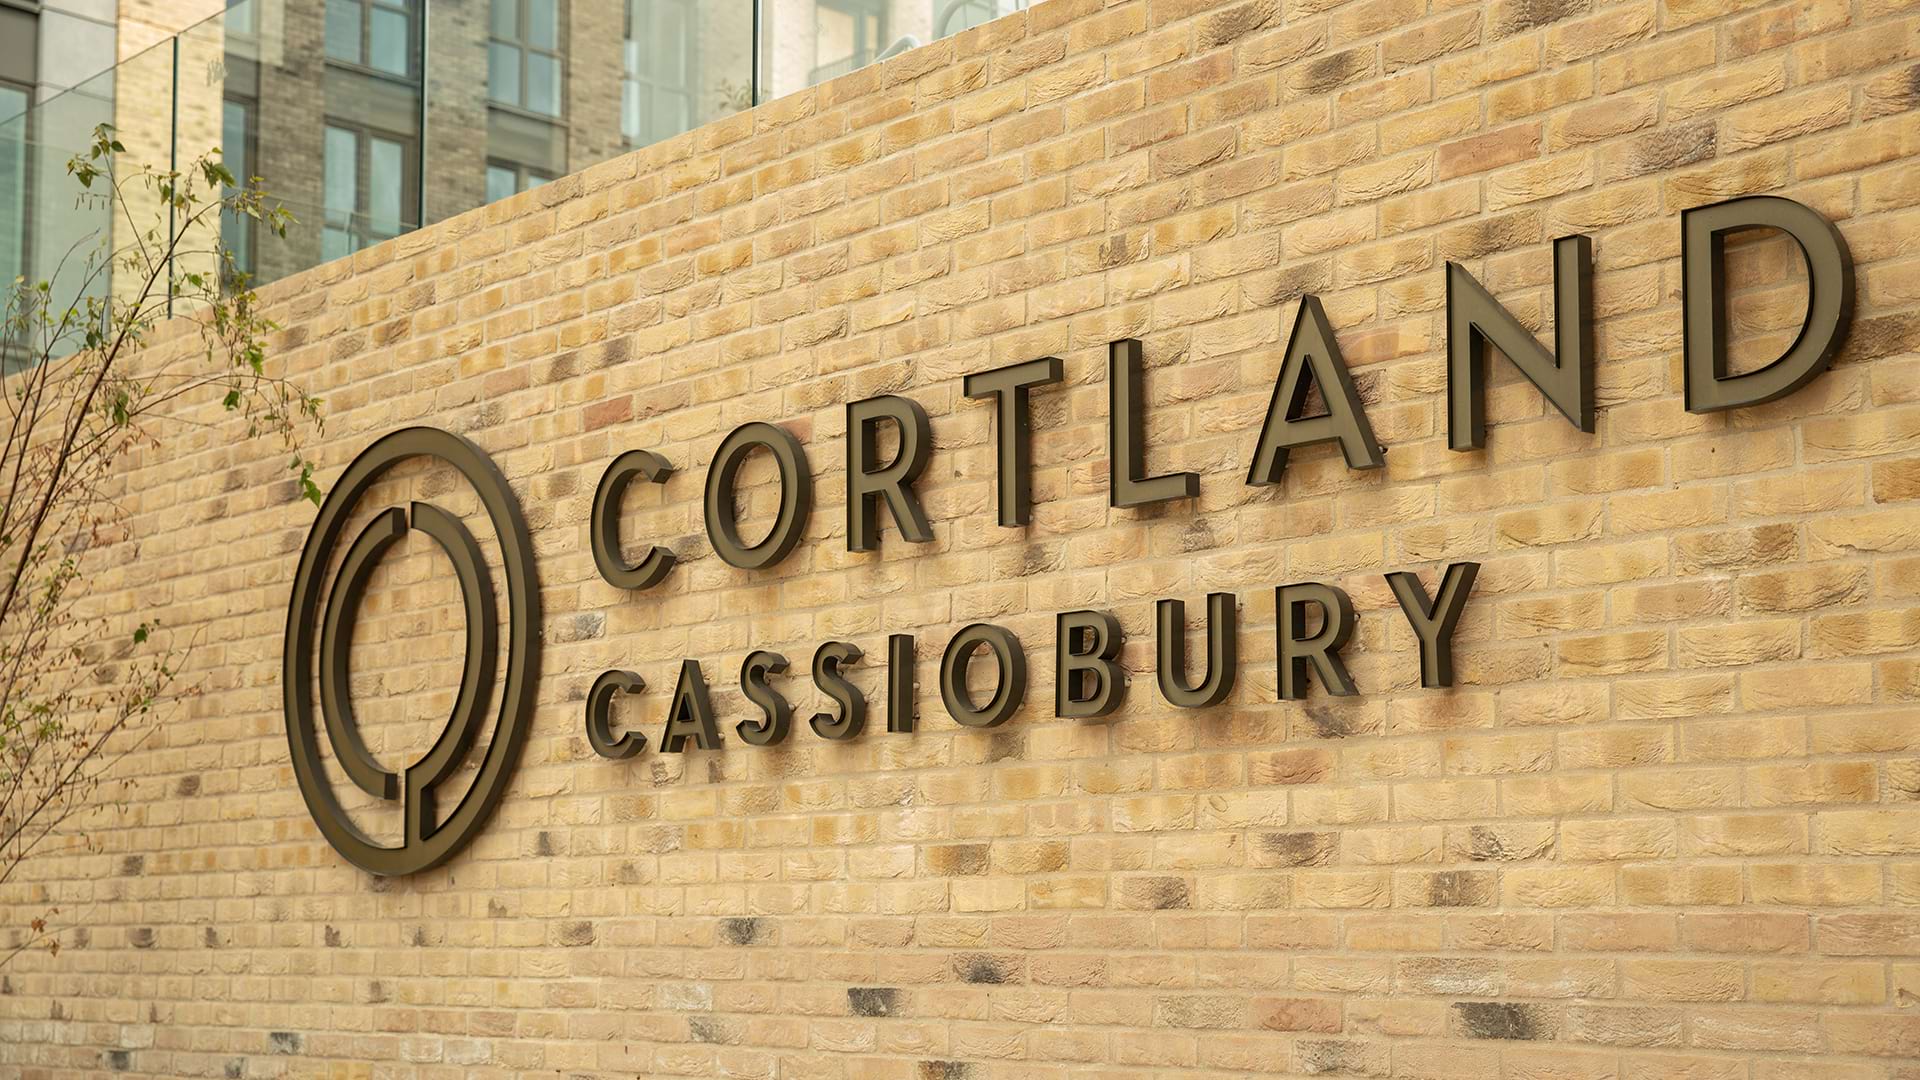 Apartments to Rent by Cortland in Cortland Cassiobury, Watford, WD18, development logo